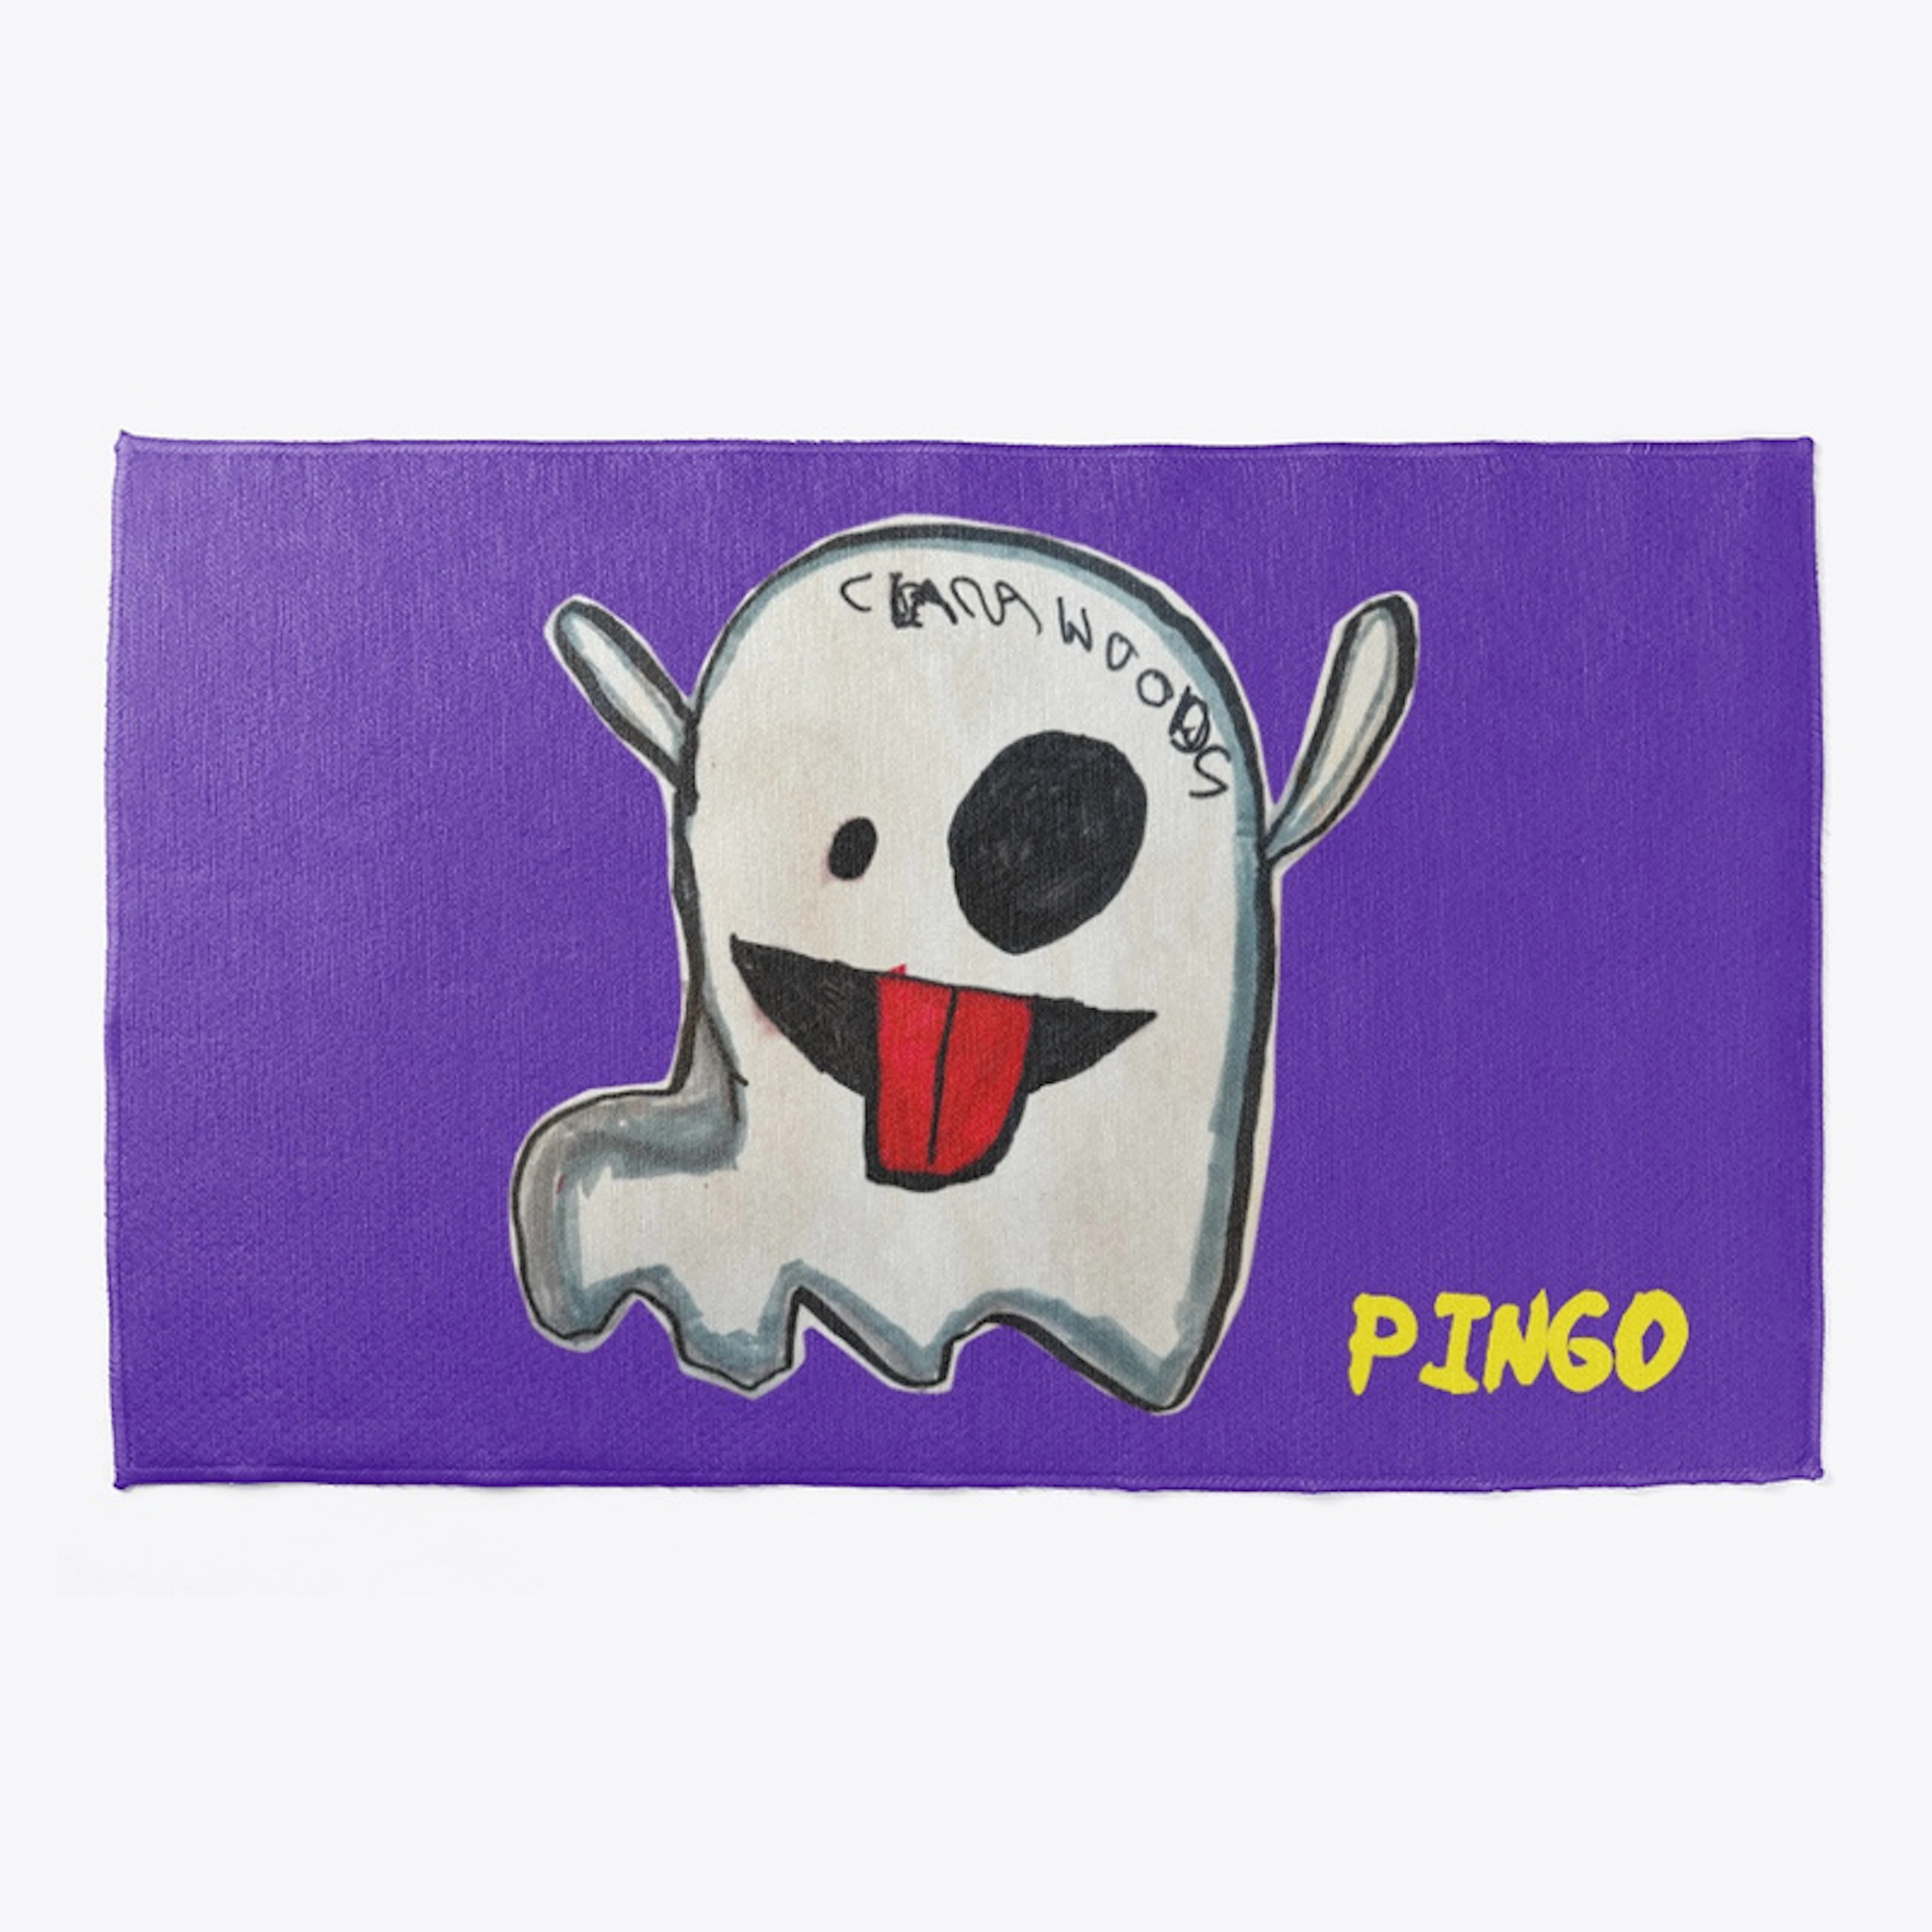 PINGO, the ghost